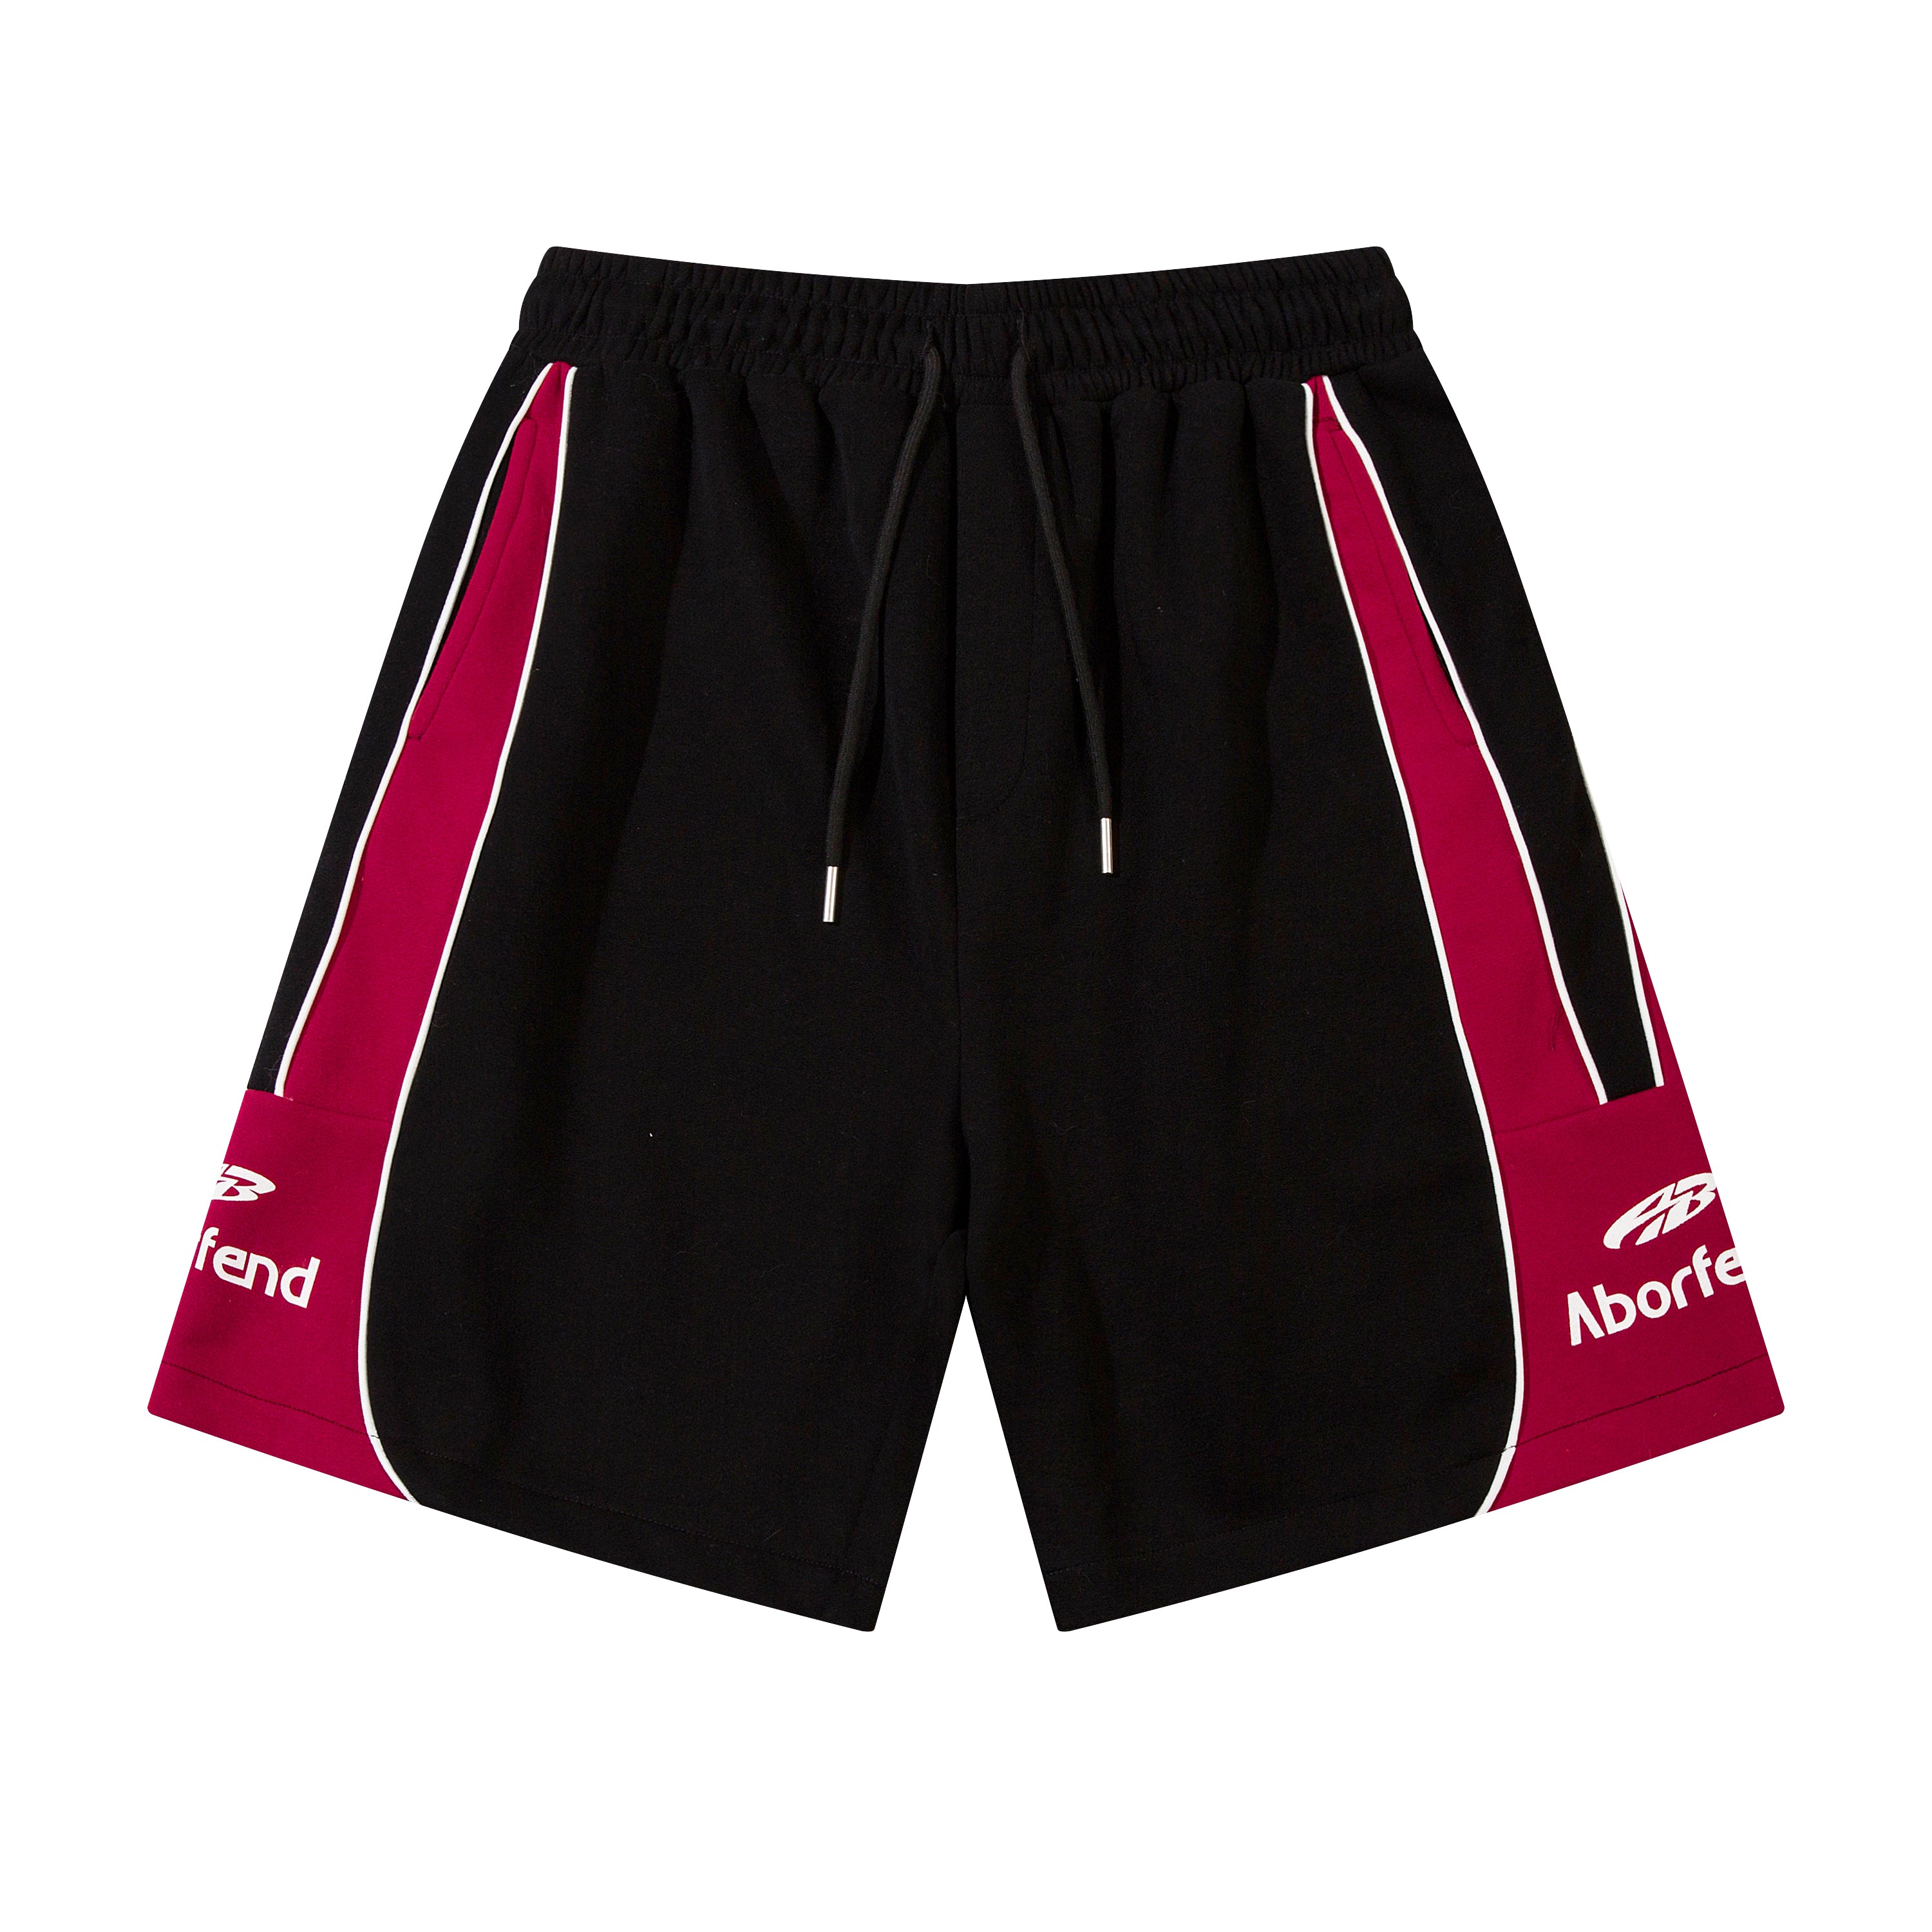 "Dual Tone" Athletic Shorts - Santo 